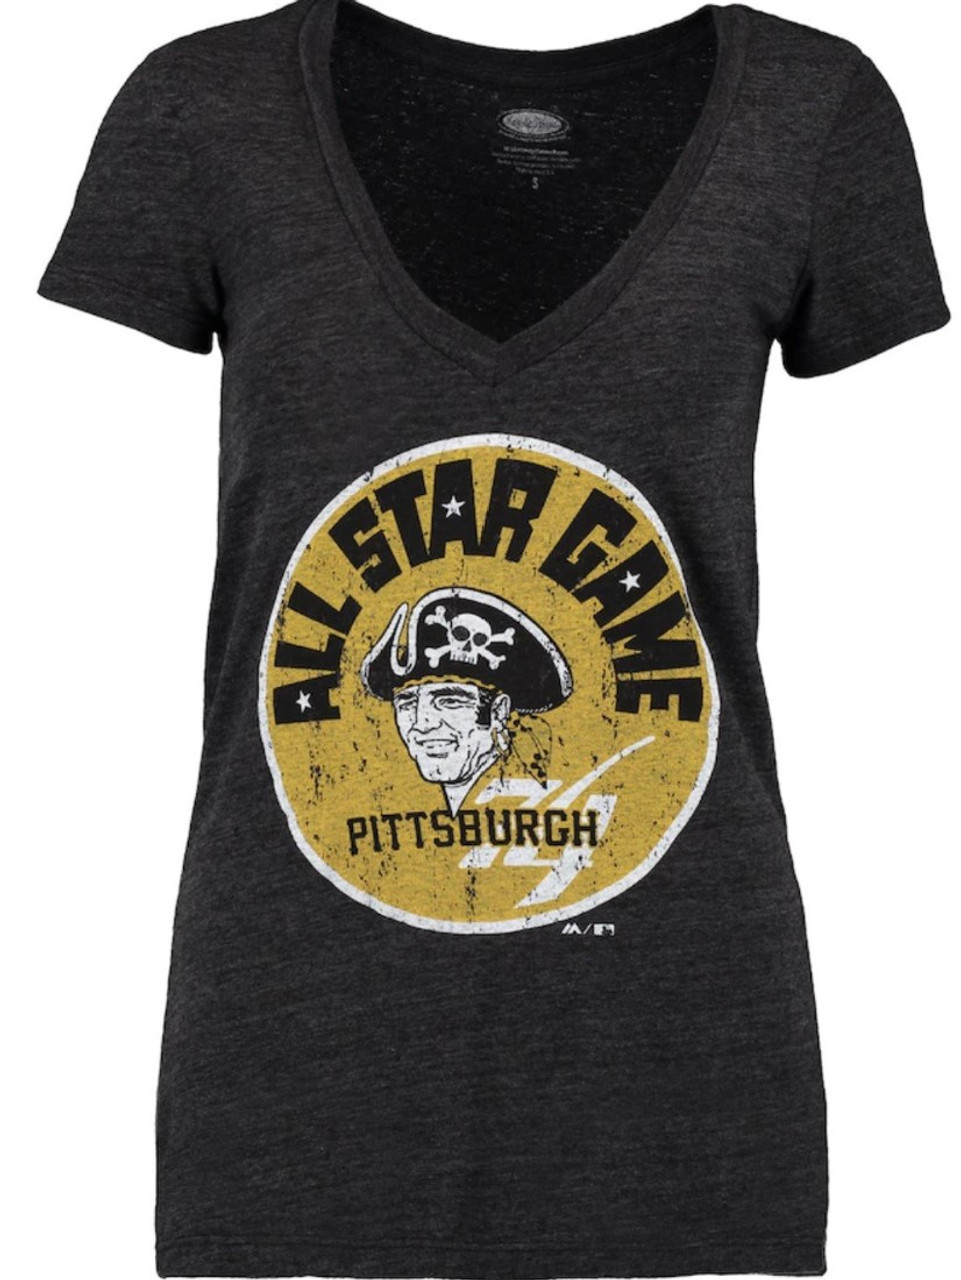 Pittsburgh Pirates MLB All Star Game Women's Shirt